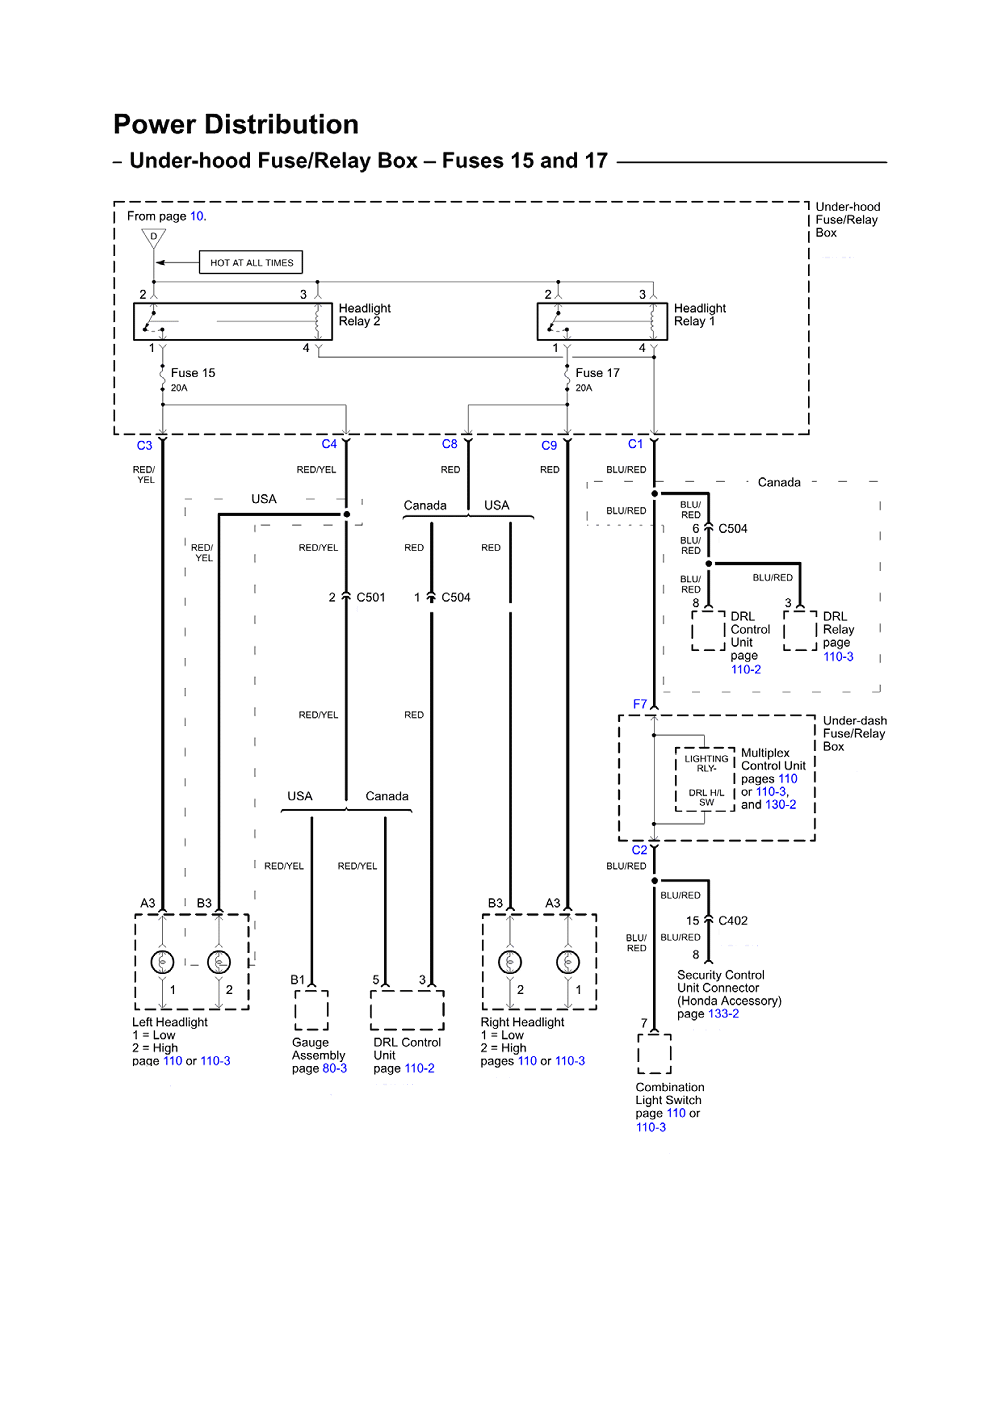 1982 Honda Ct110 Wiring Diagram - Wiring Diagram Schemas